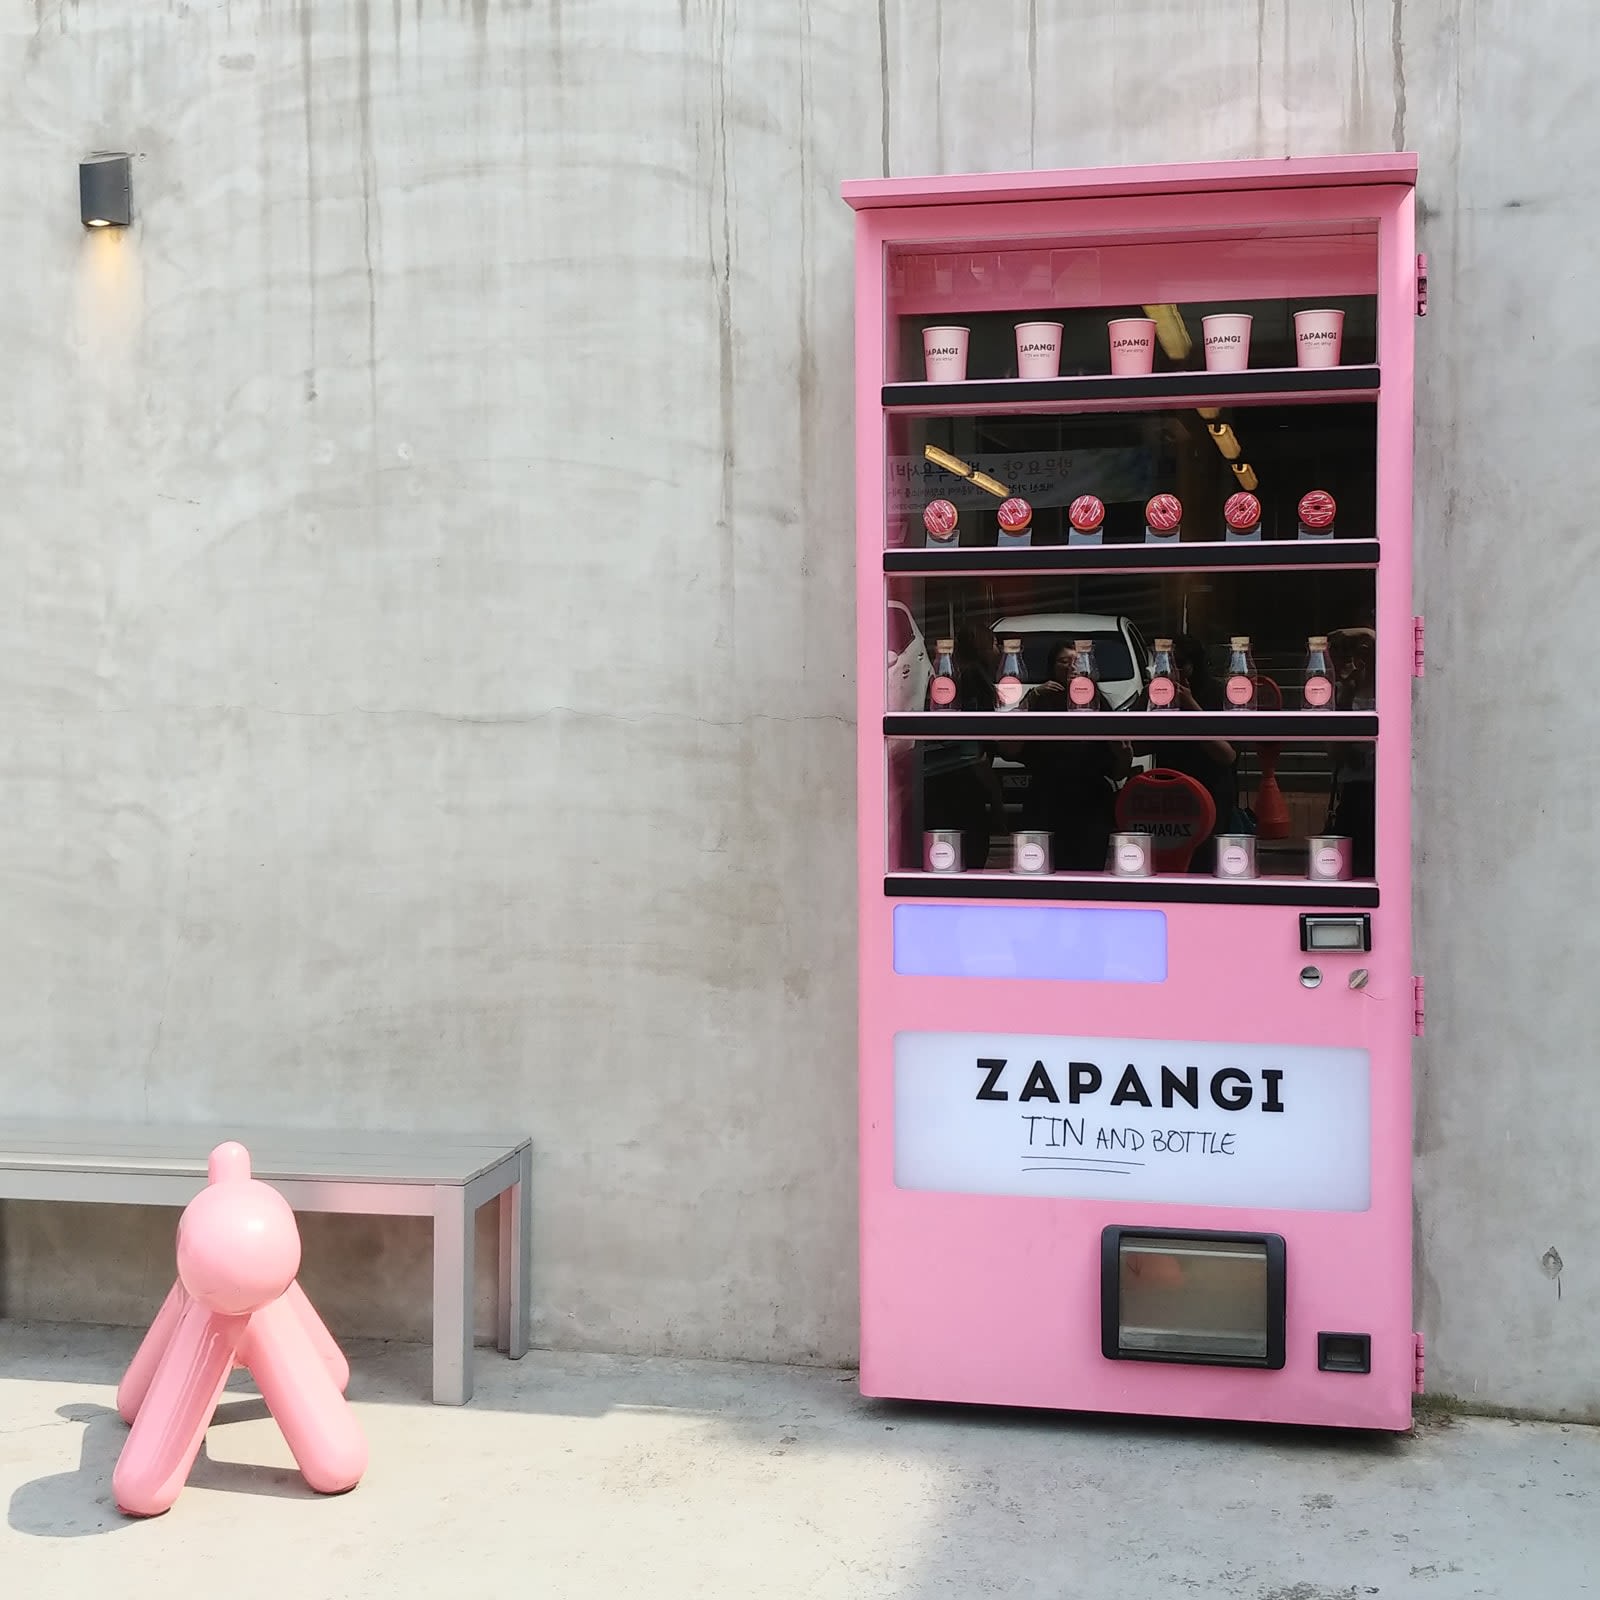 ice vending machine for sale craigslist